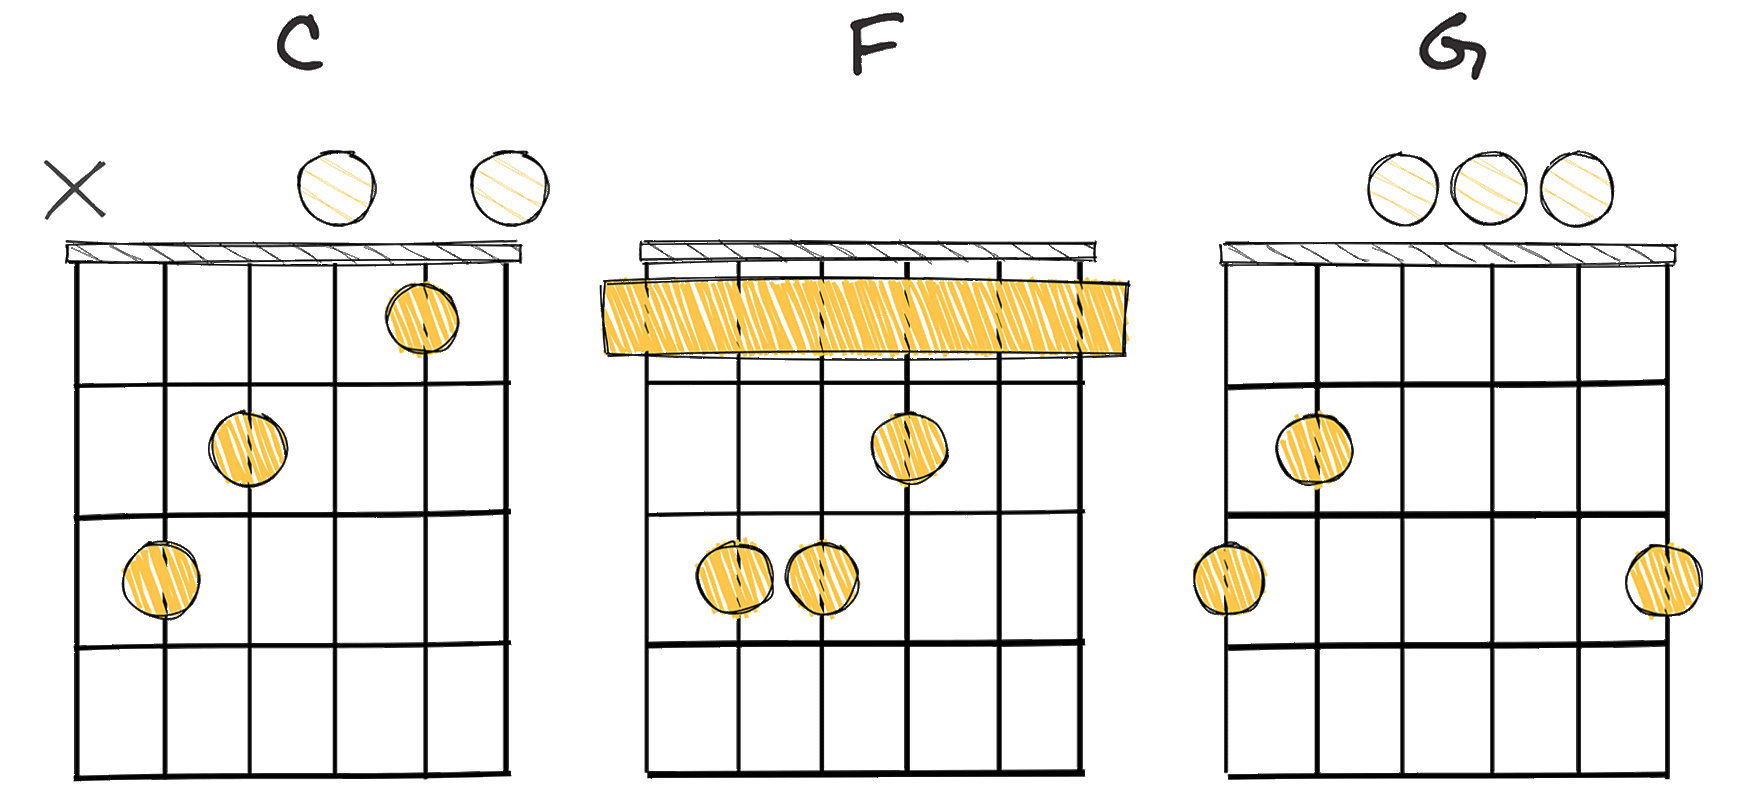 I-IV-V (1-4-5) chords diagram